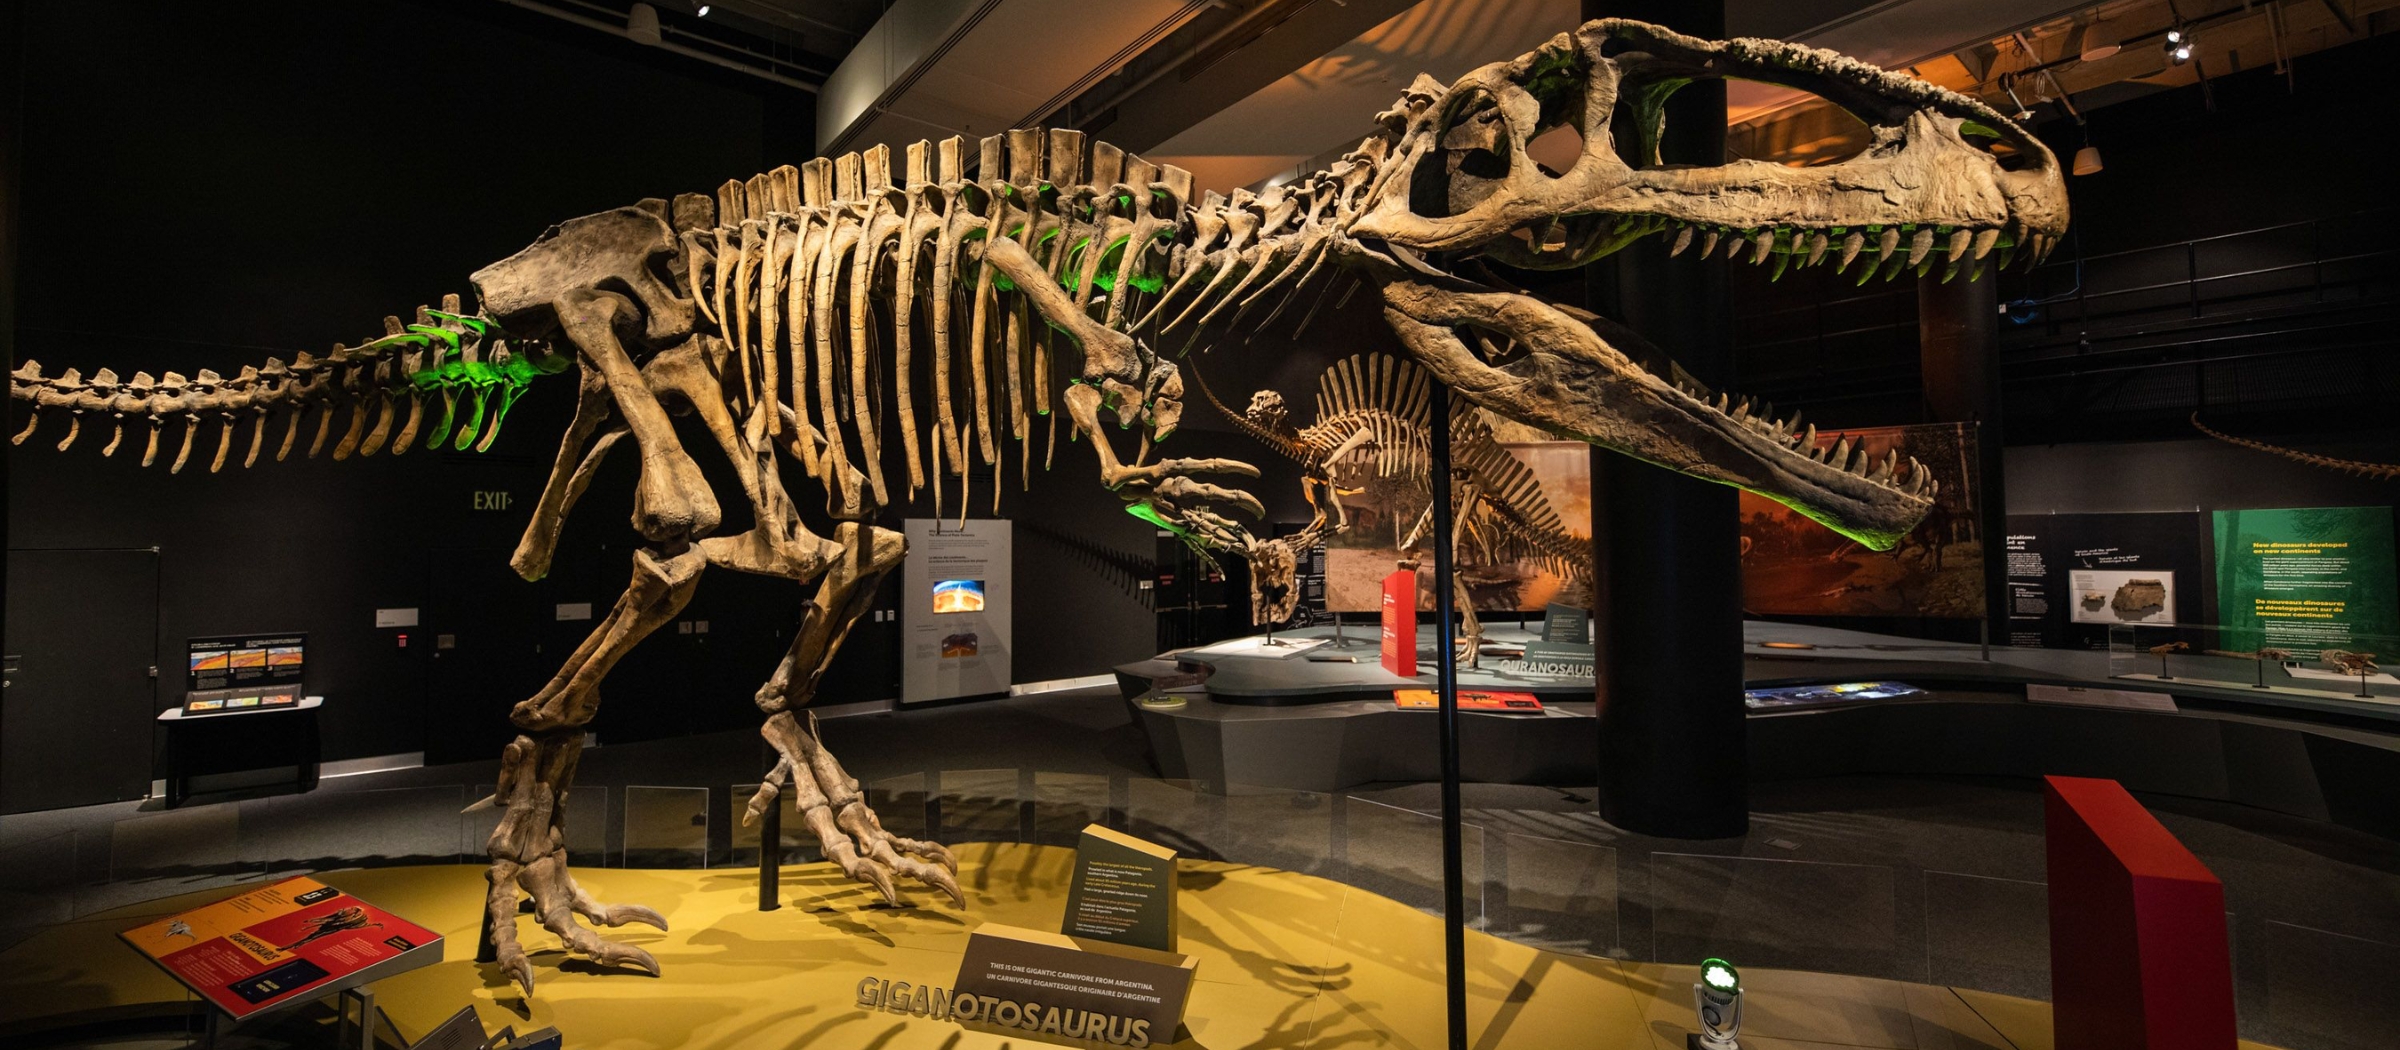 Dinosaur fossil at science museum